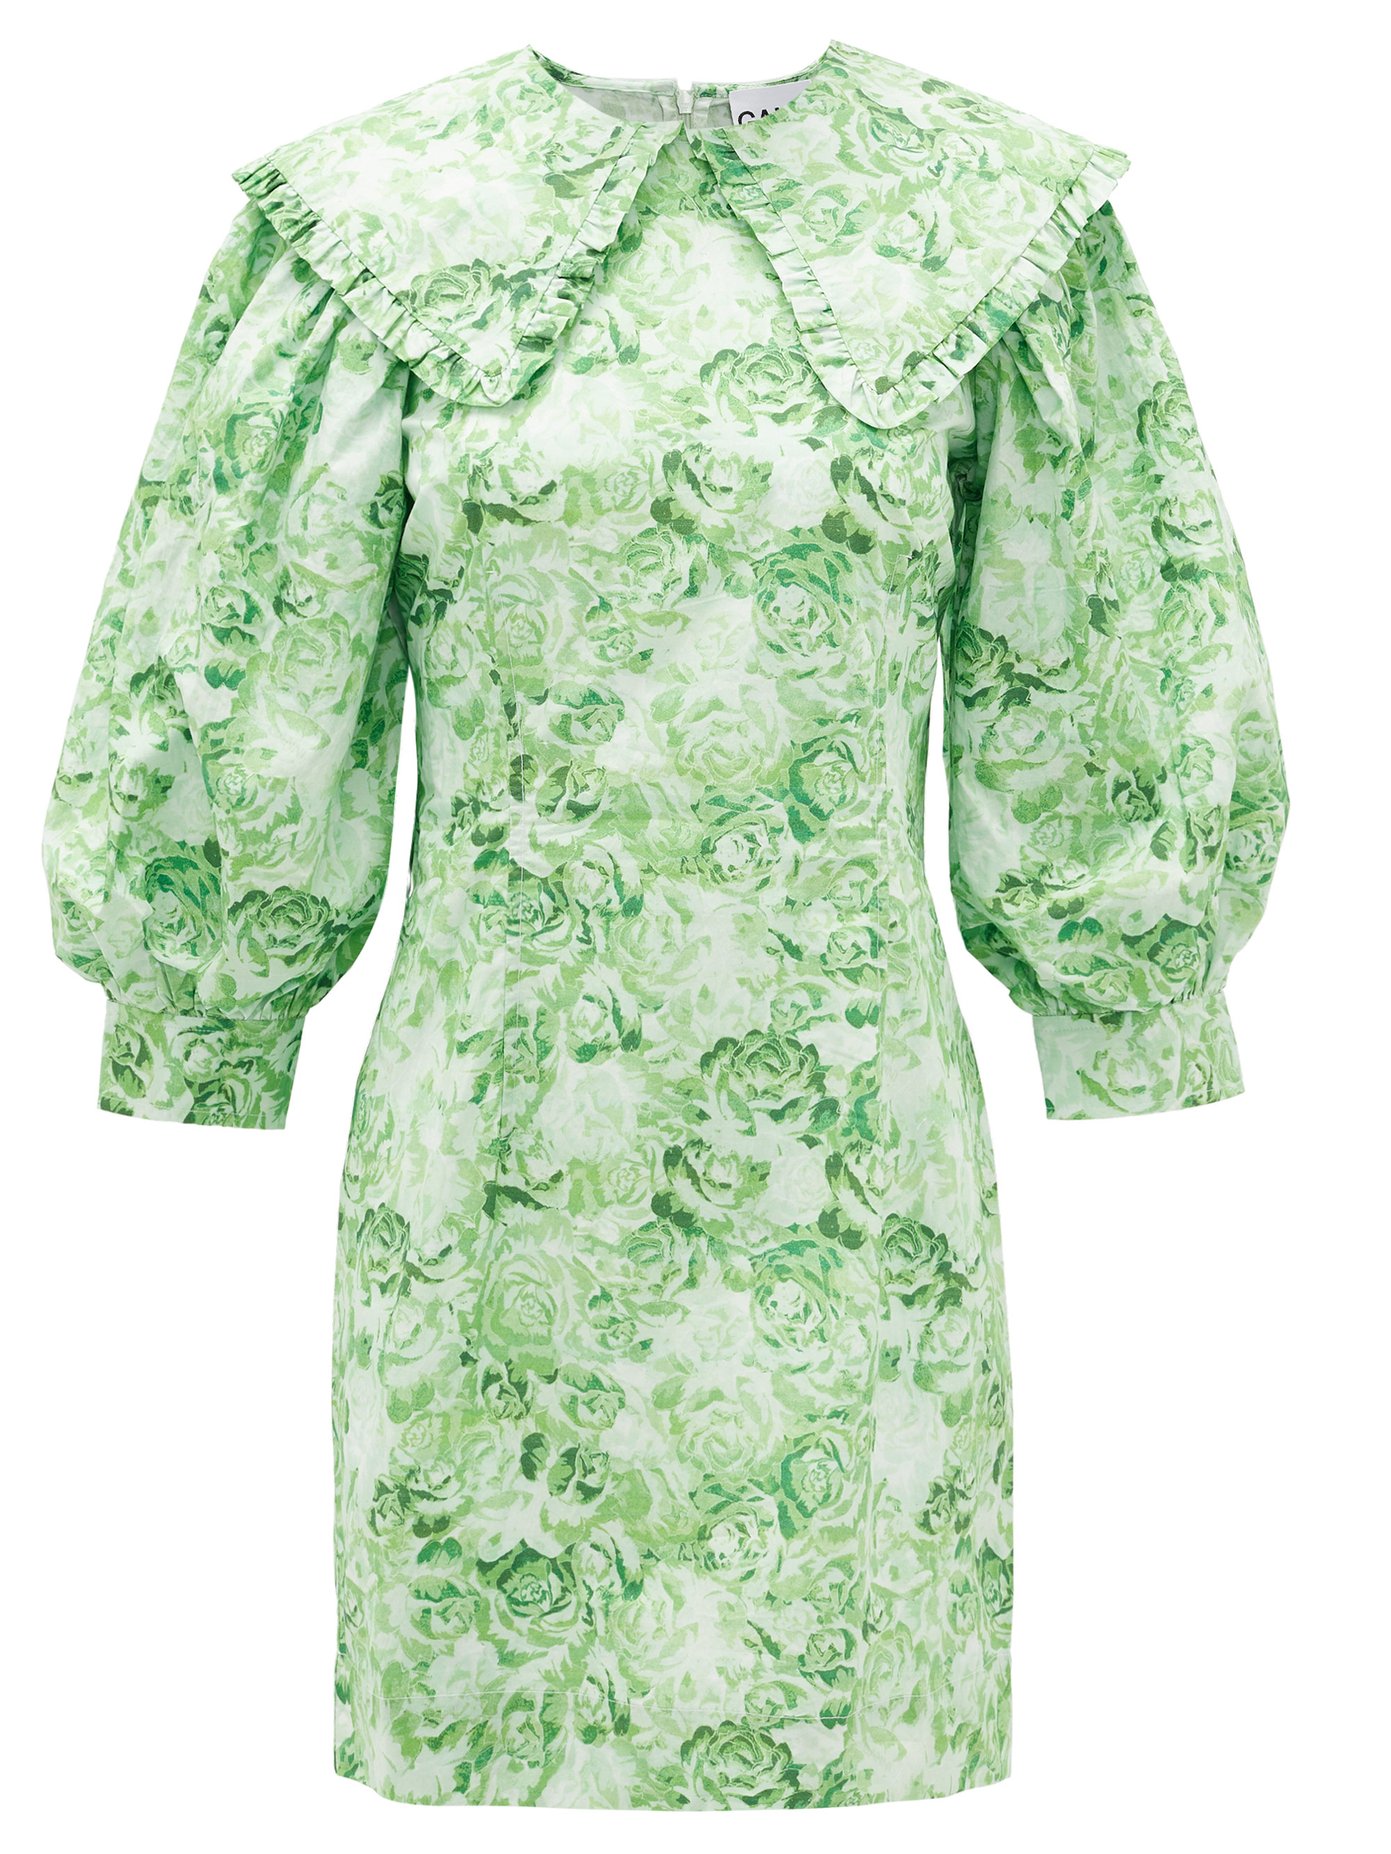 ganni green dress